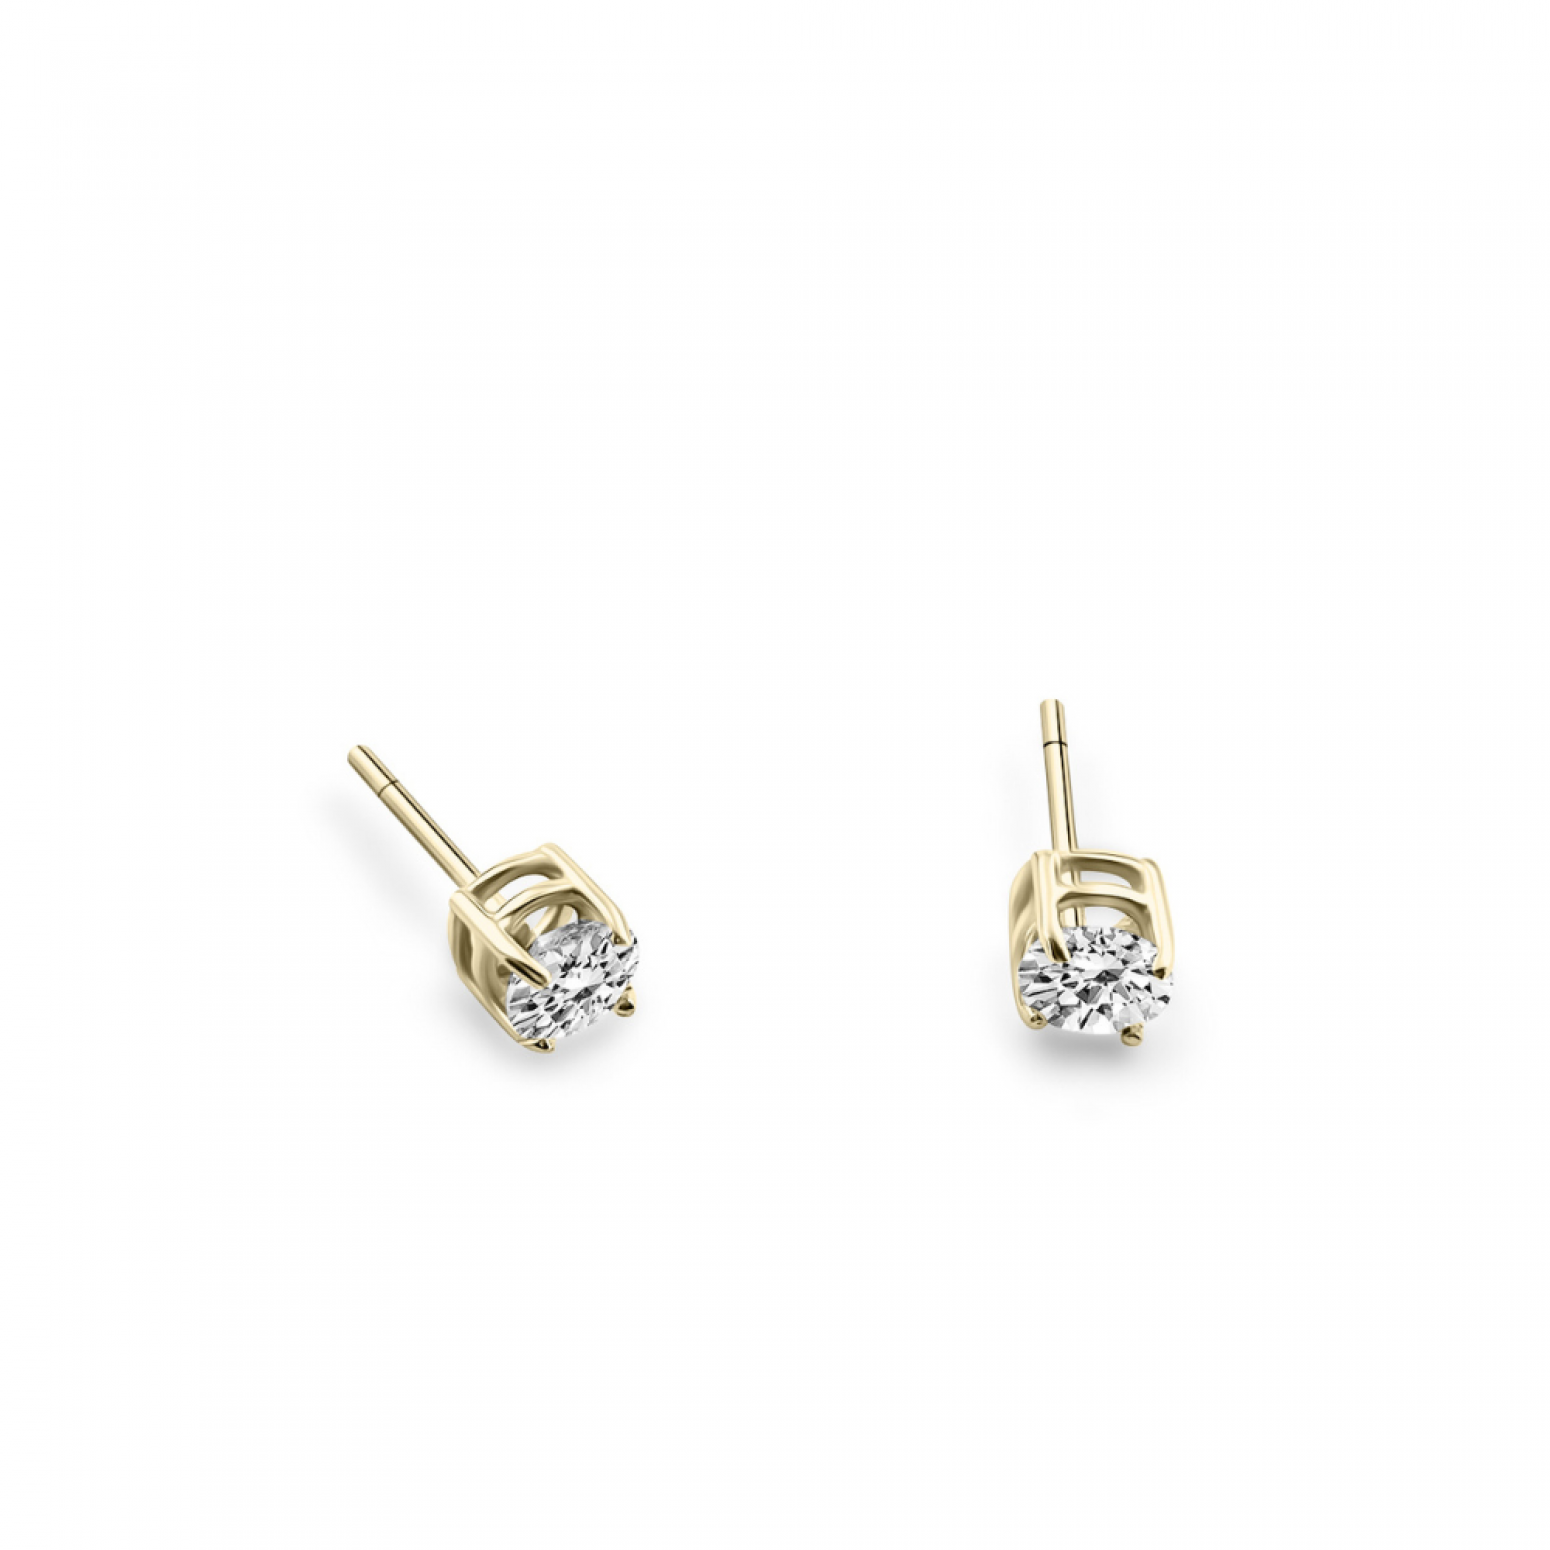 Solitaire earrings 9K gold with zircon, sk4122 EARRINGS Κοσμηματα - chrilia.gr